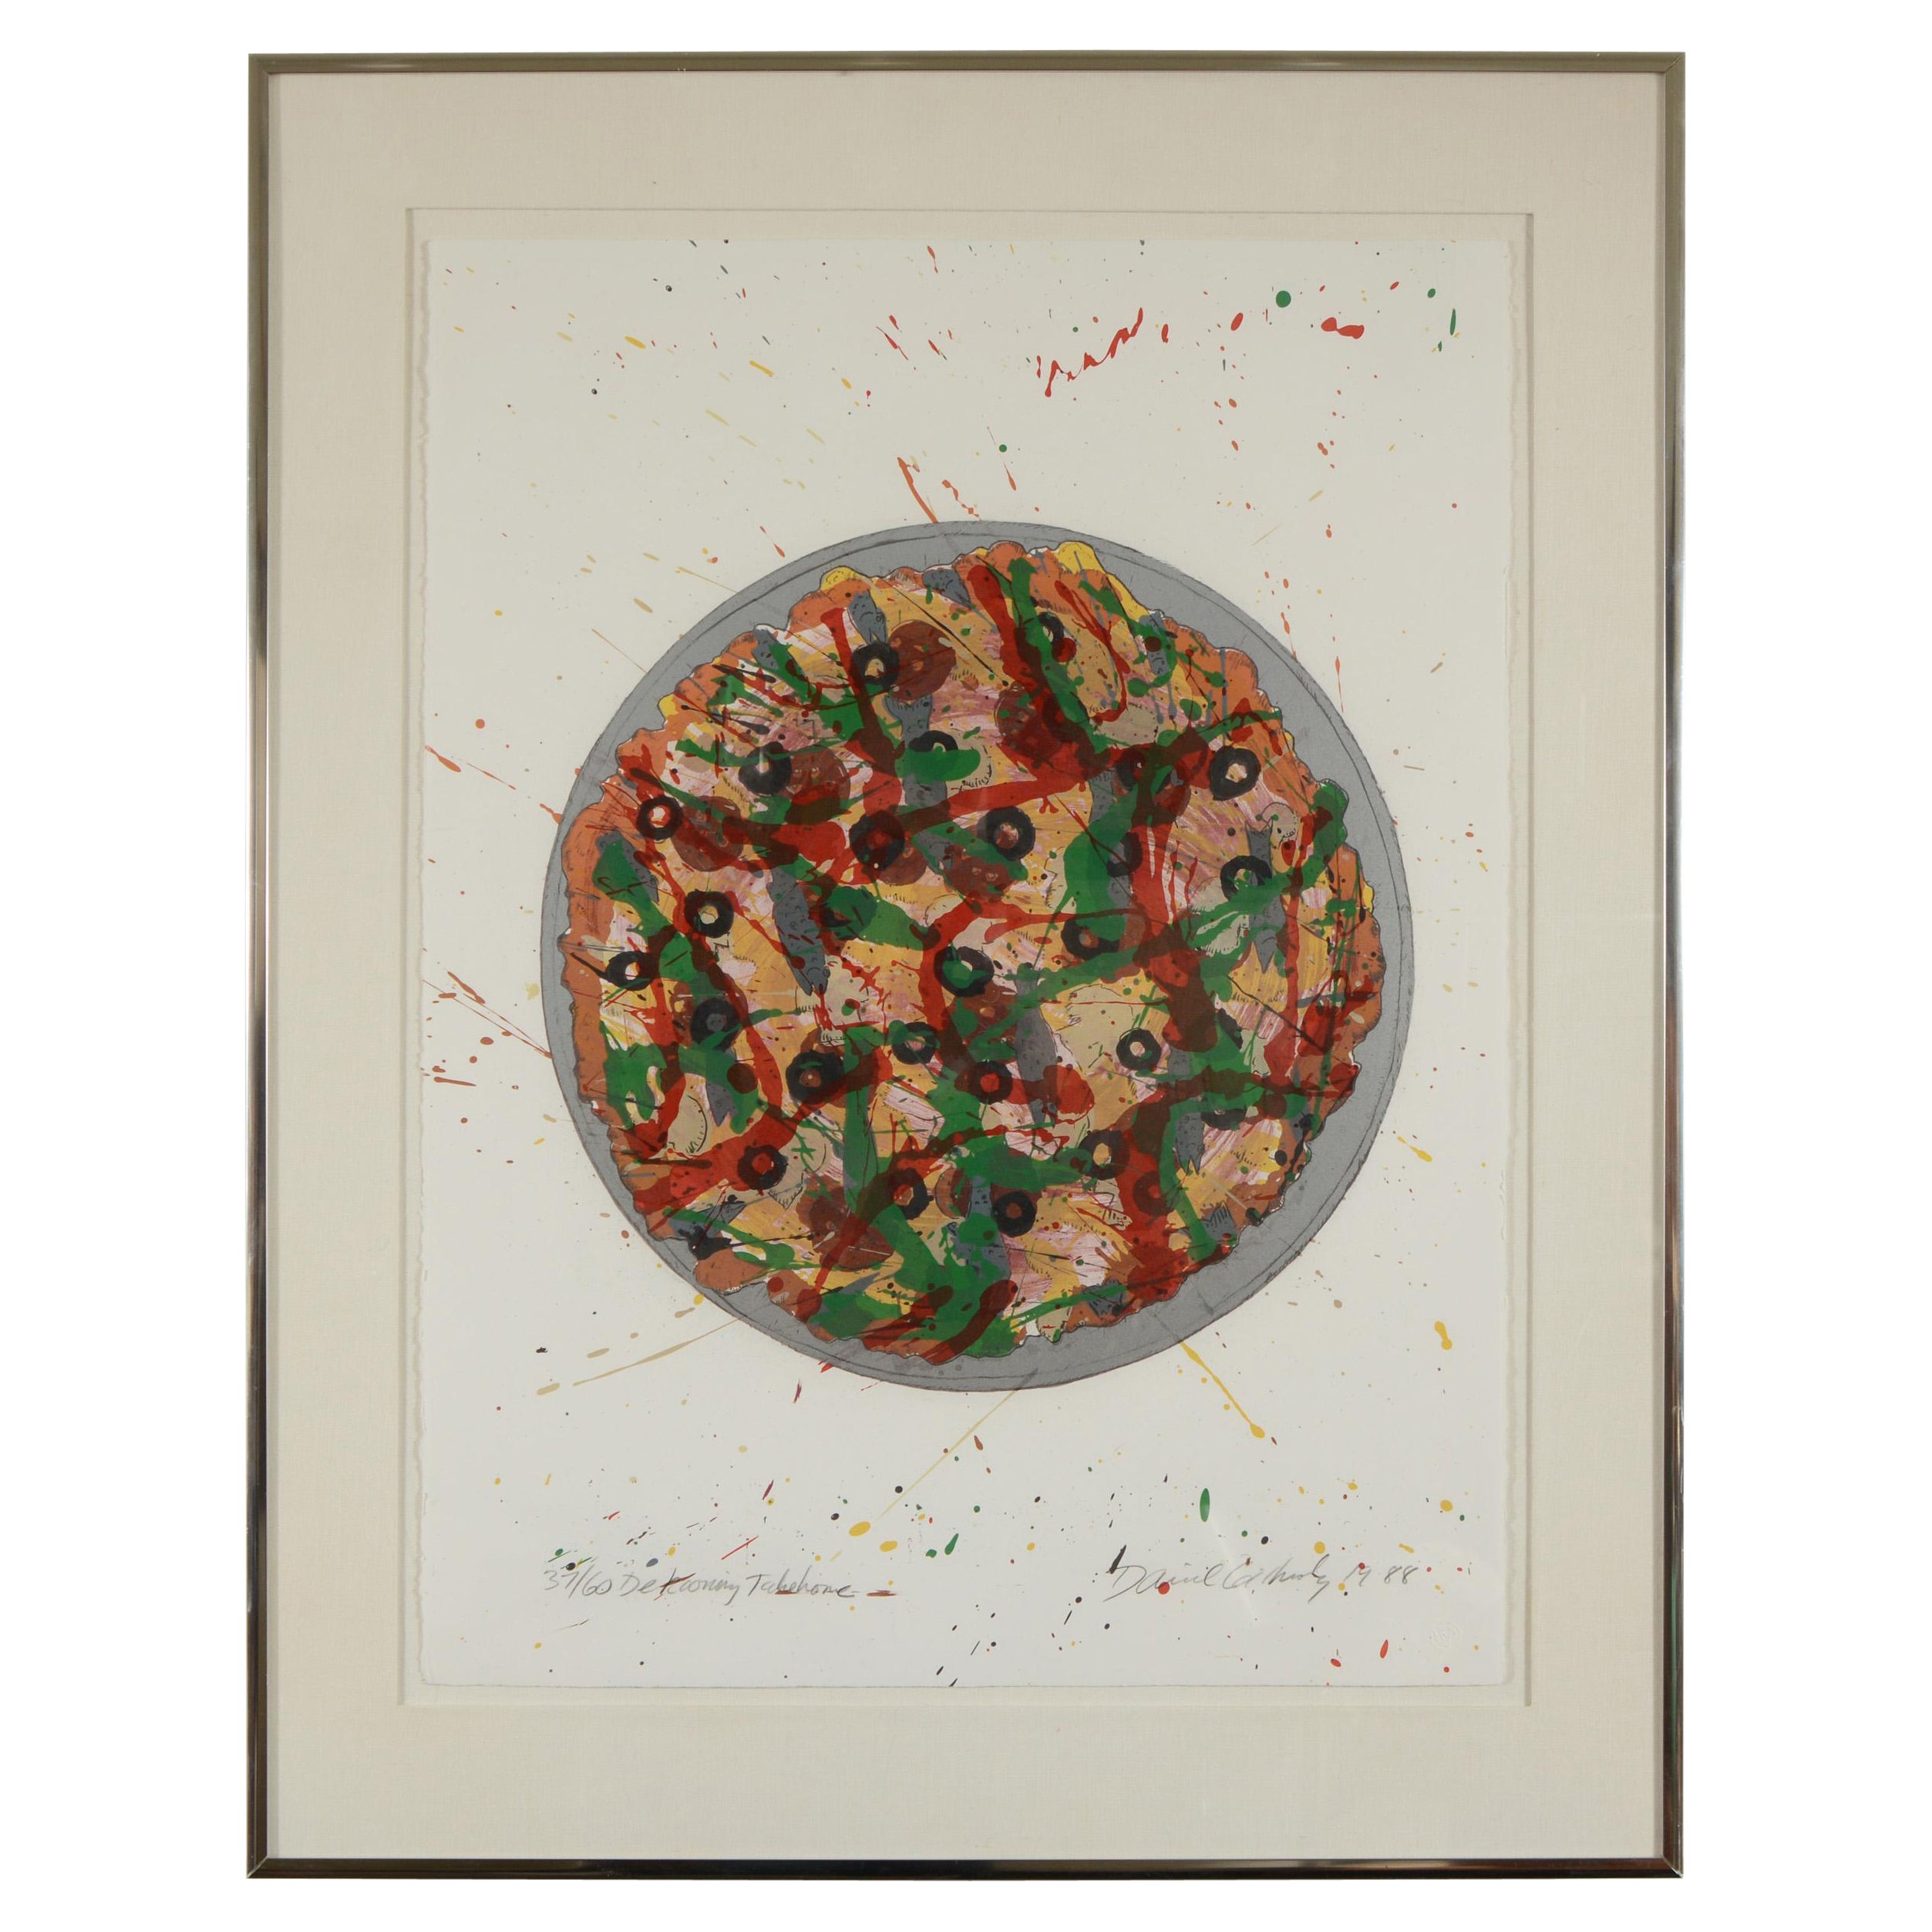 David Gilhooly "De Kooning Take Home Pizza" Print